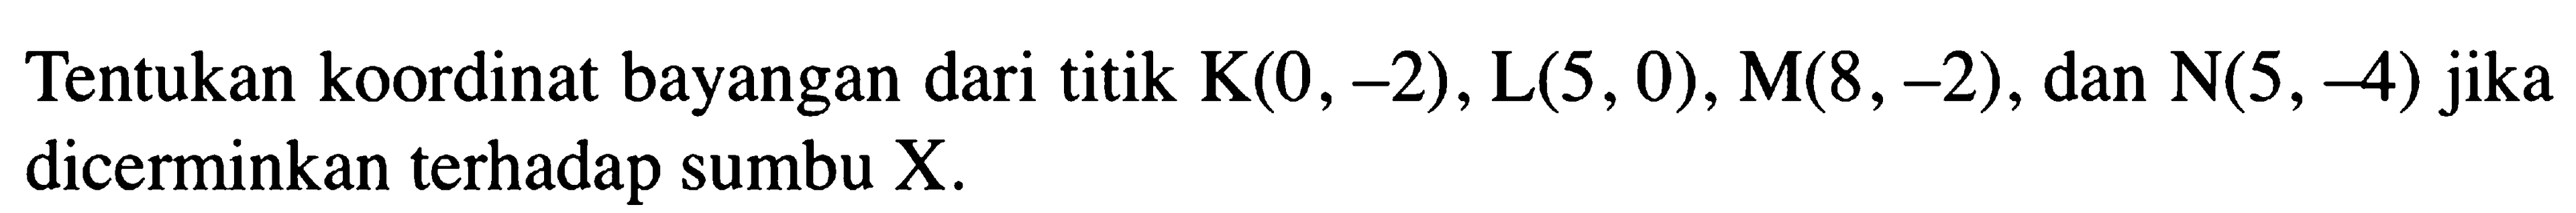 Tentukan koordinat bayangan dari titik  K(0,-2), L(5,0), M(8,-2) , dan  N(5,-4)  jika dicerminkan terhadap sumbu X.